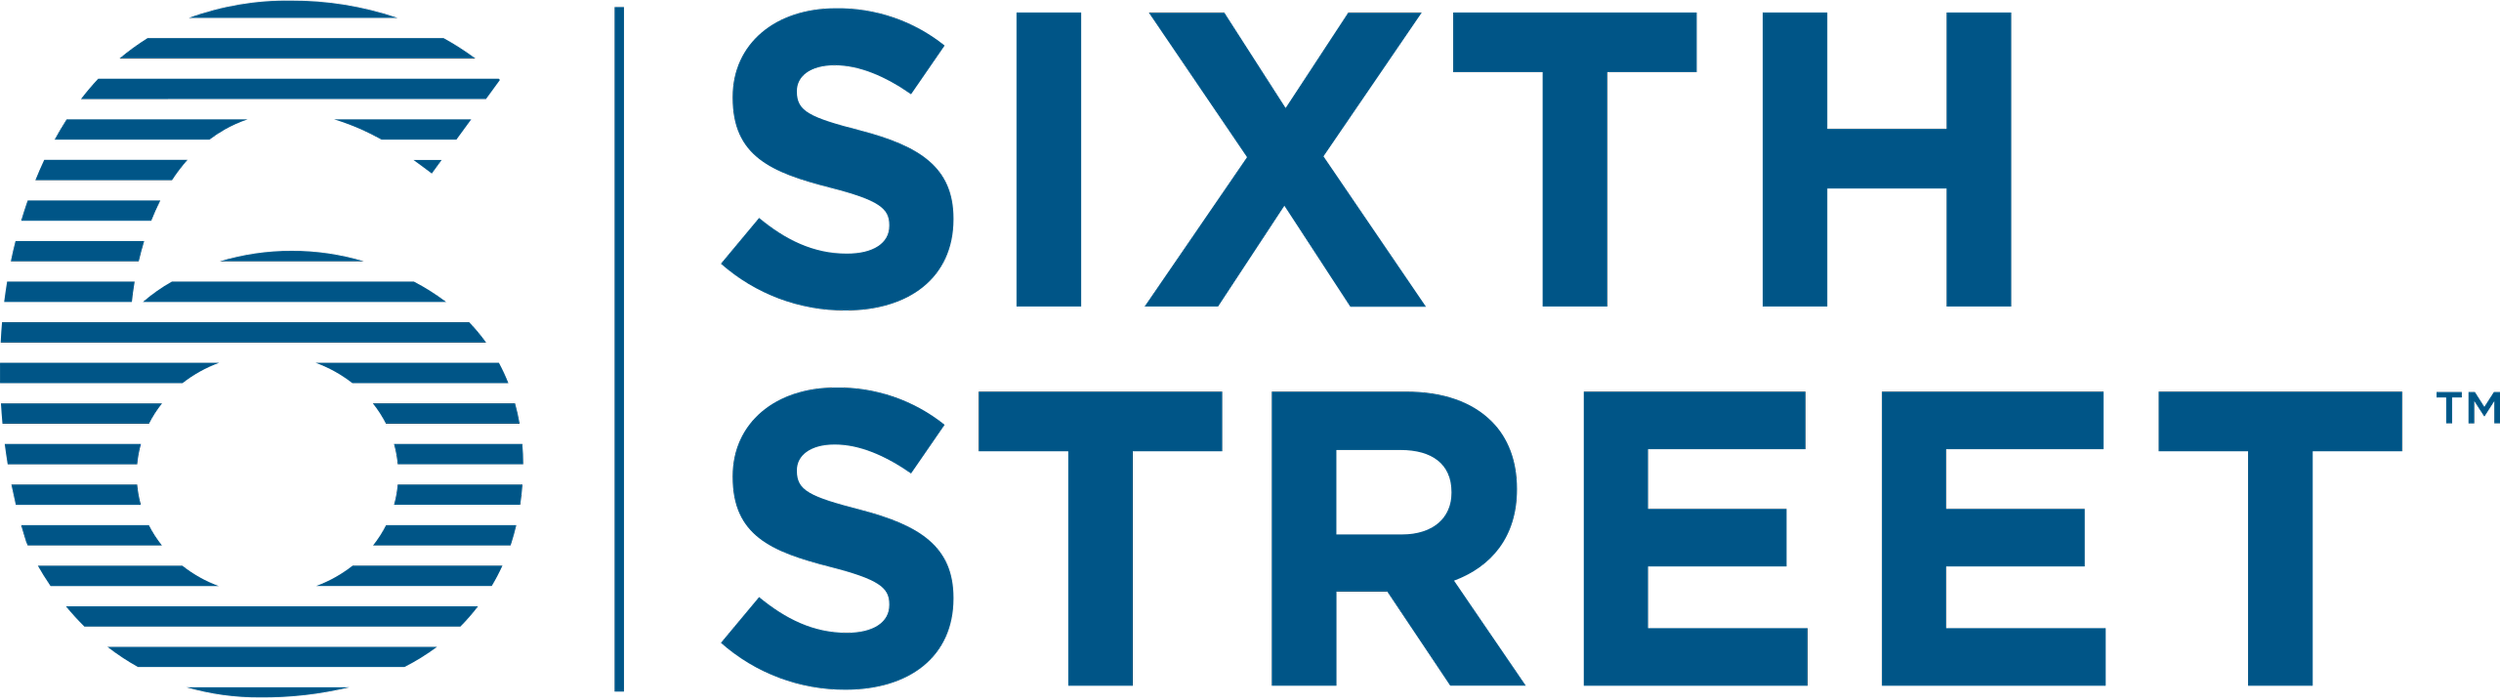 Sixth-Street_logo.svg.png